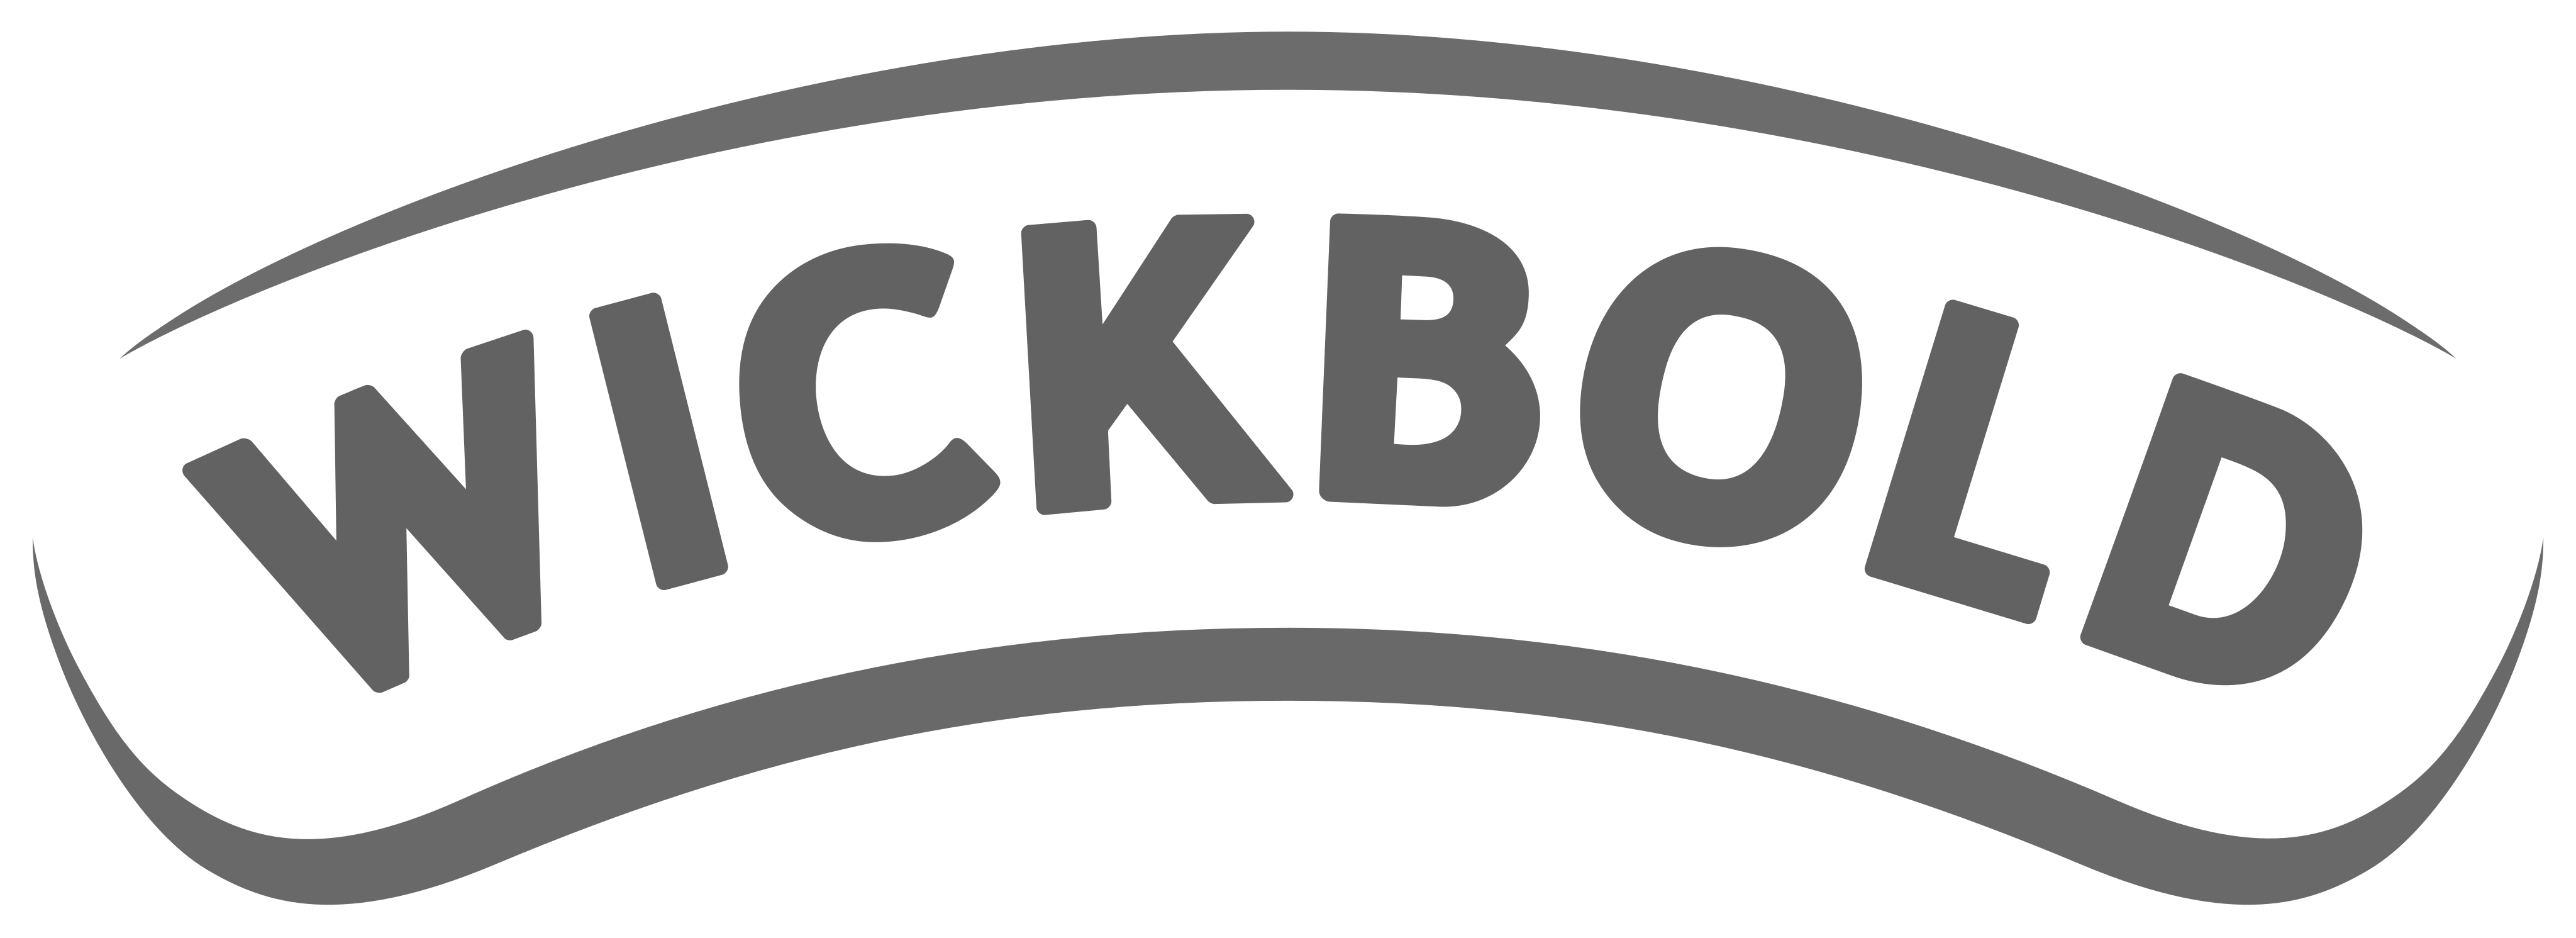 Logotipo: Wickbold